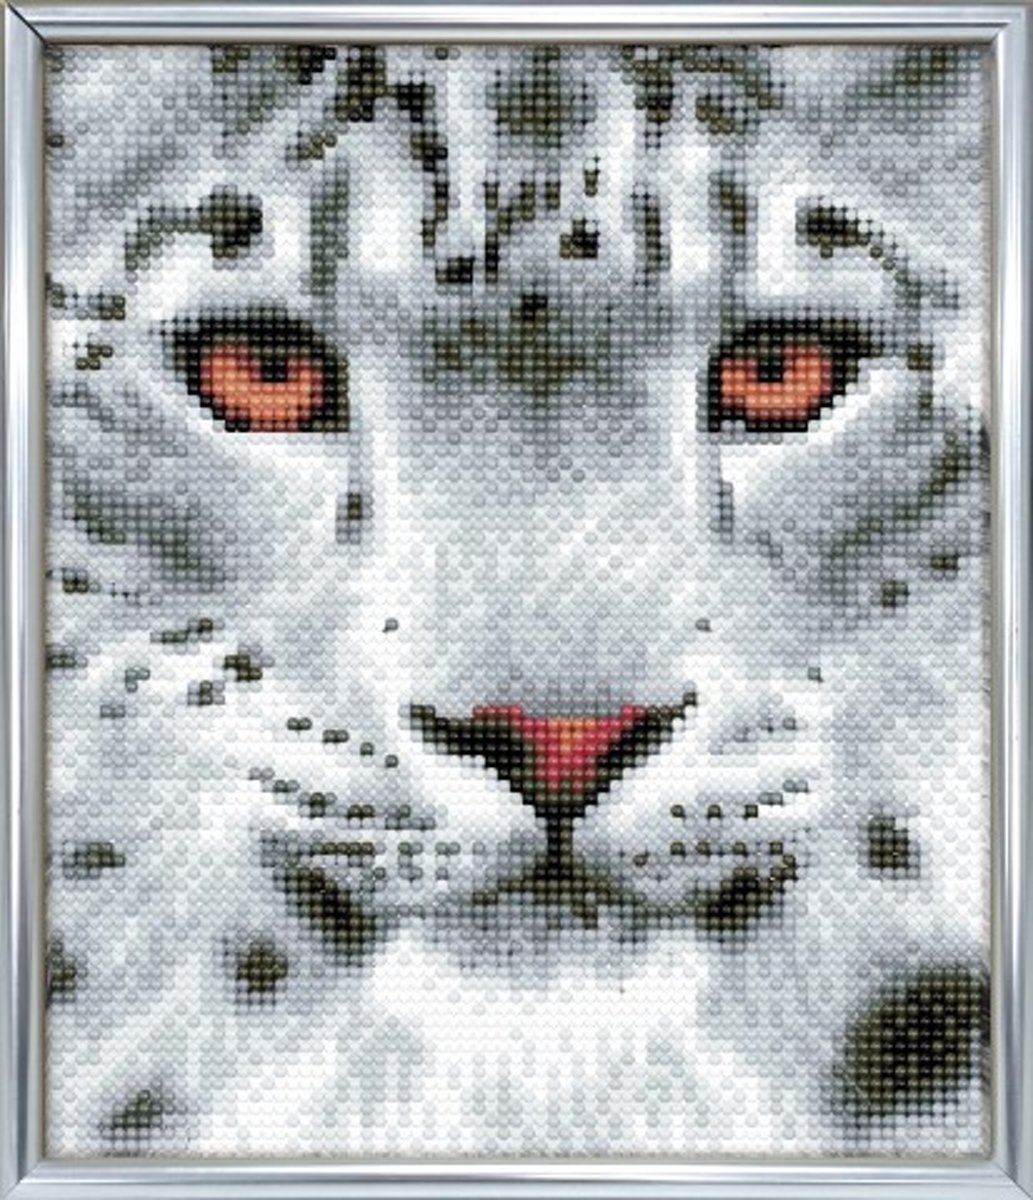 Diamond Painting Crystal Art Kit ® Snow Leopard 21x25 cm incl. zileveren frame met standaard, full painting portrait